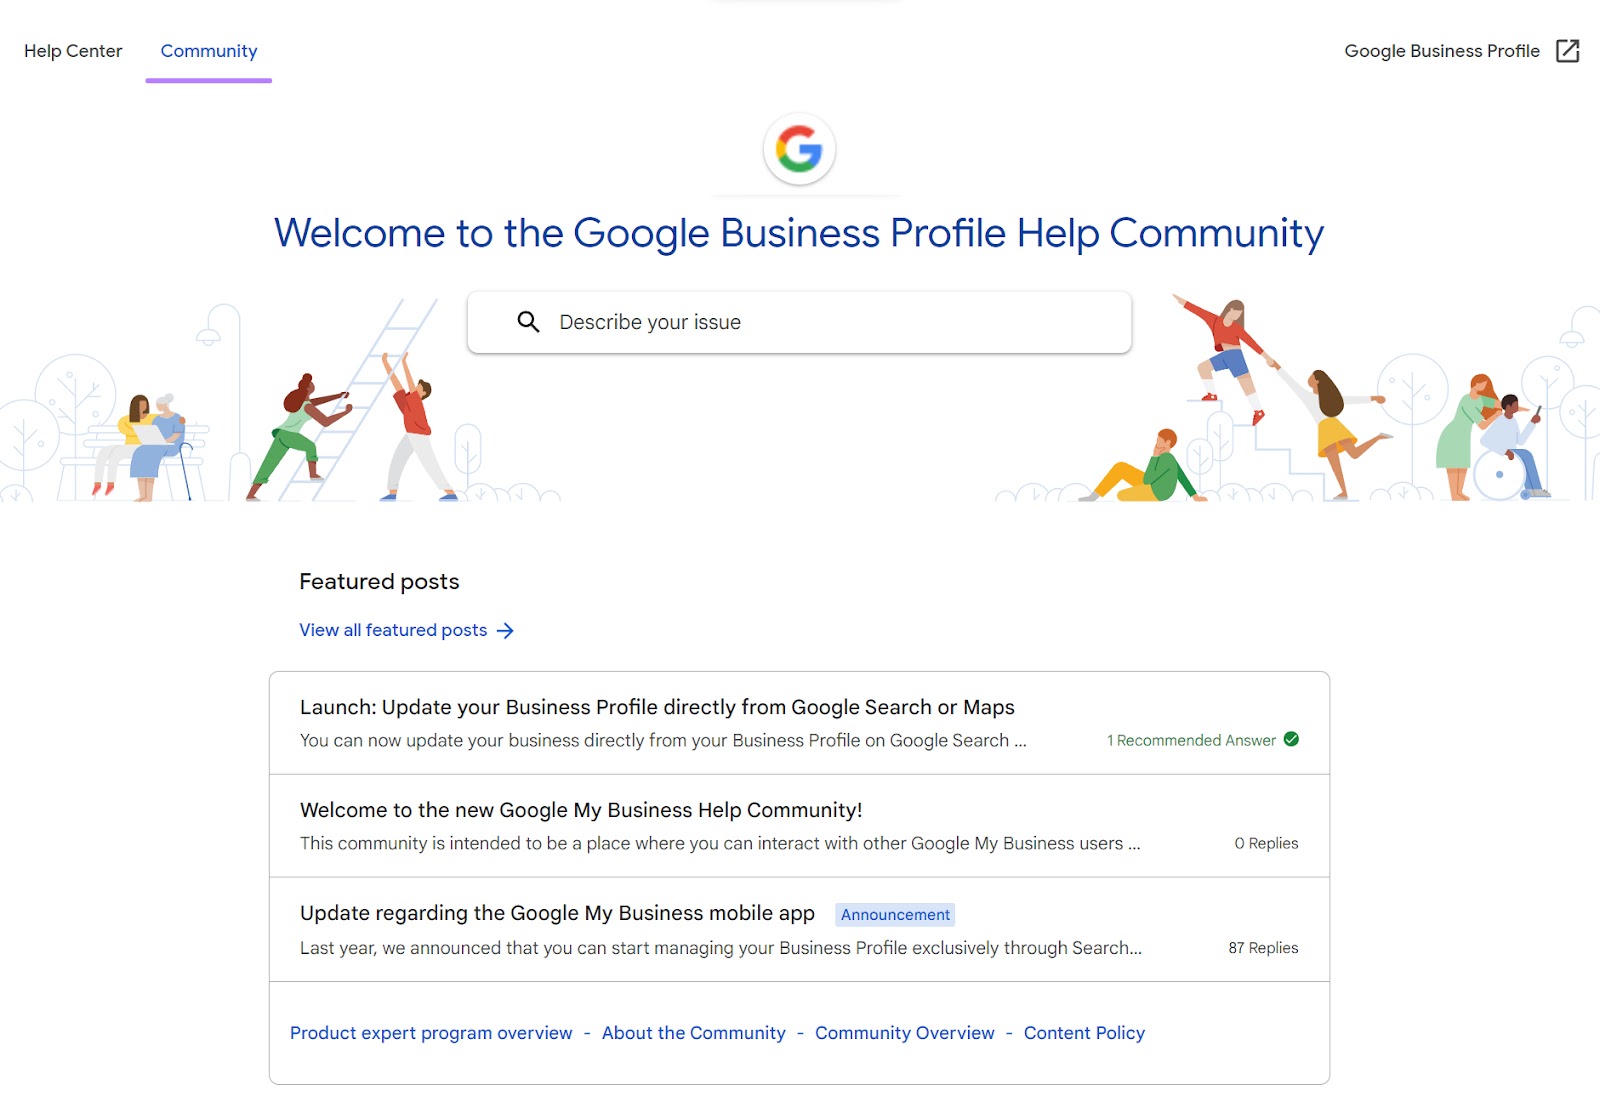 Google Business Profile Help Community page